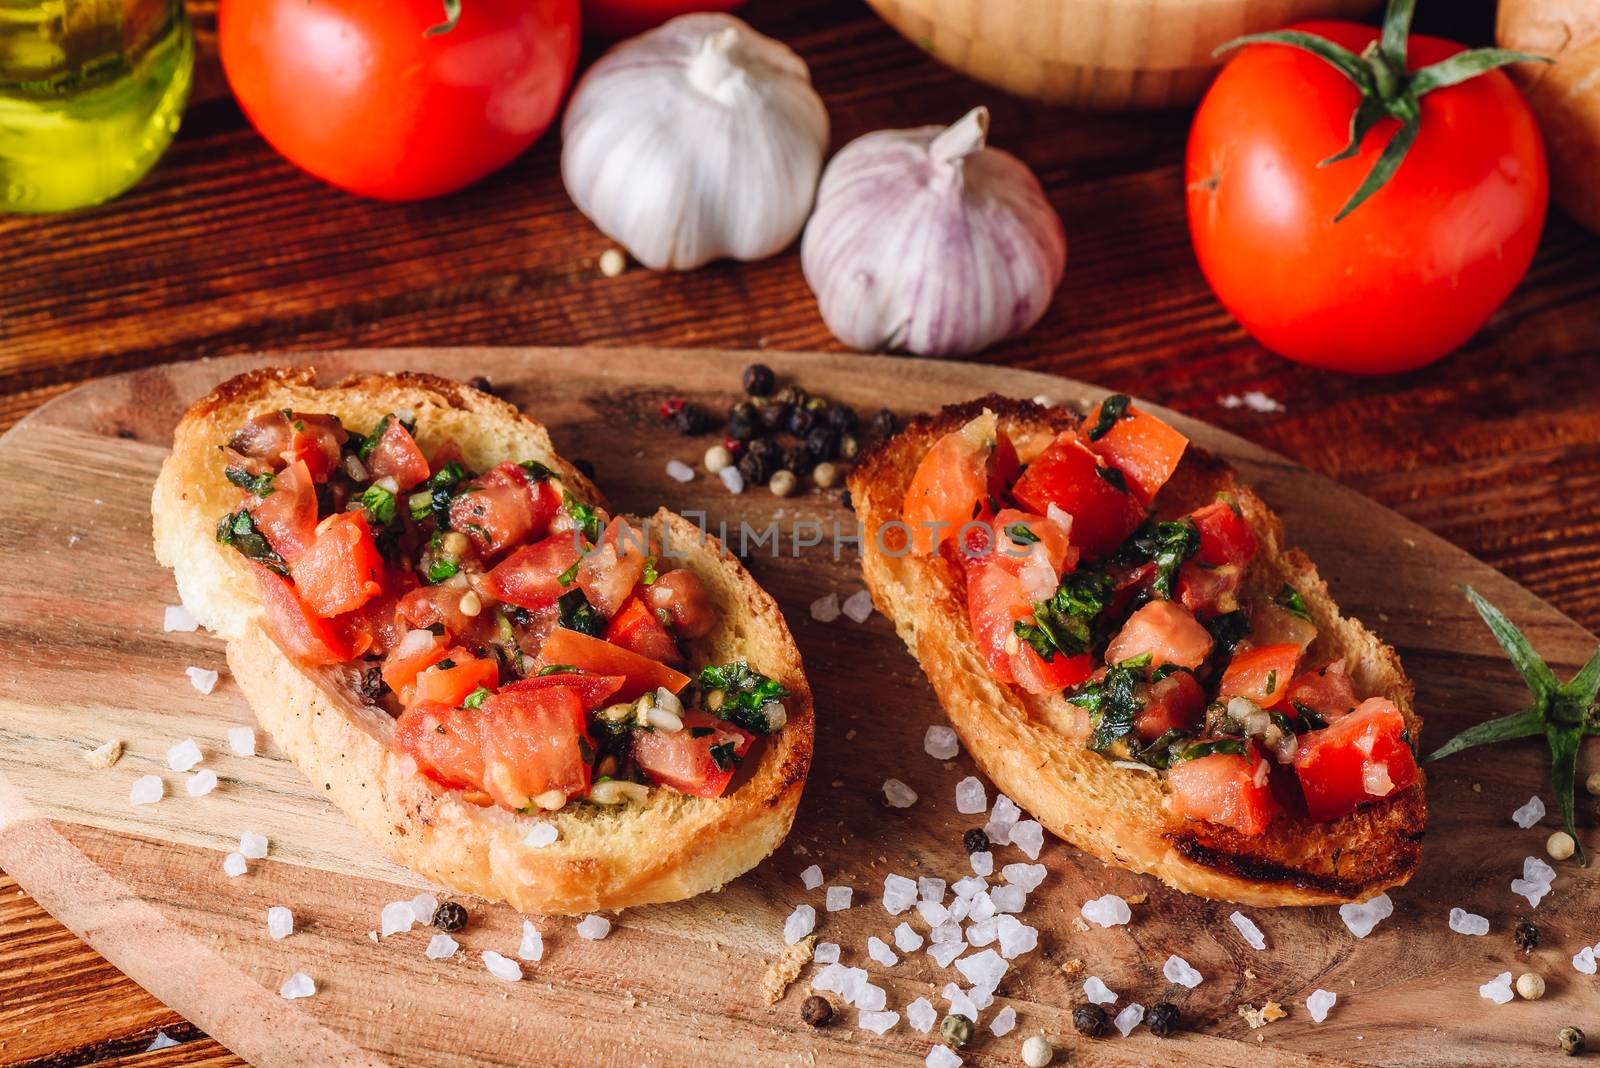 Classic Italian Bruschetta with Tomatoes by Seva_blsv